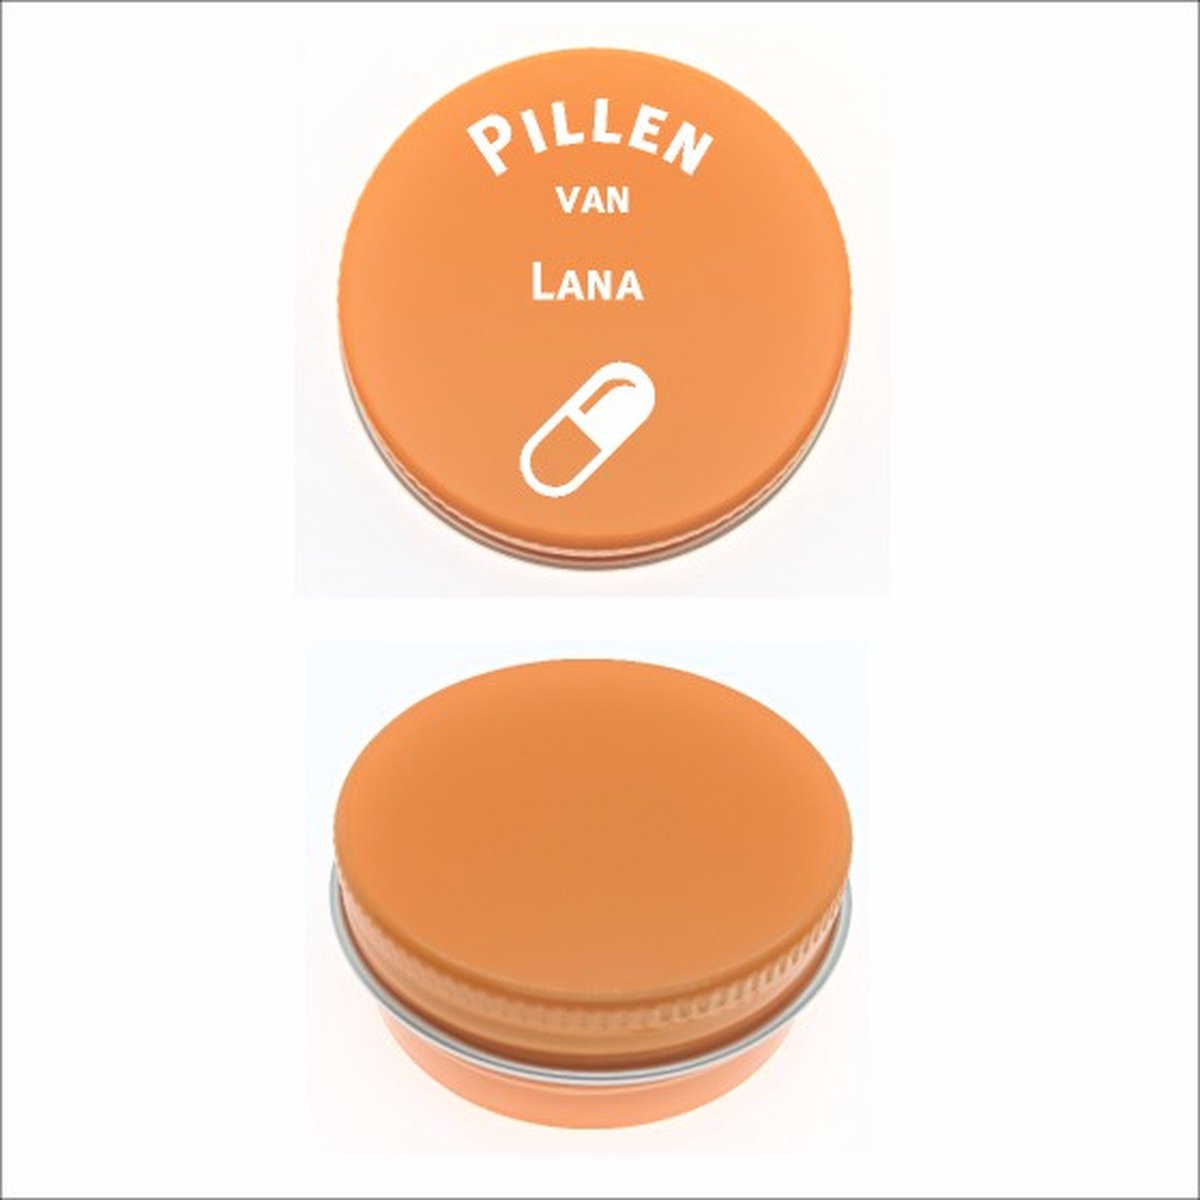 Pillen Blikje Met Naam Gravering - Lana